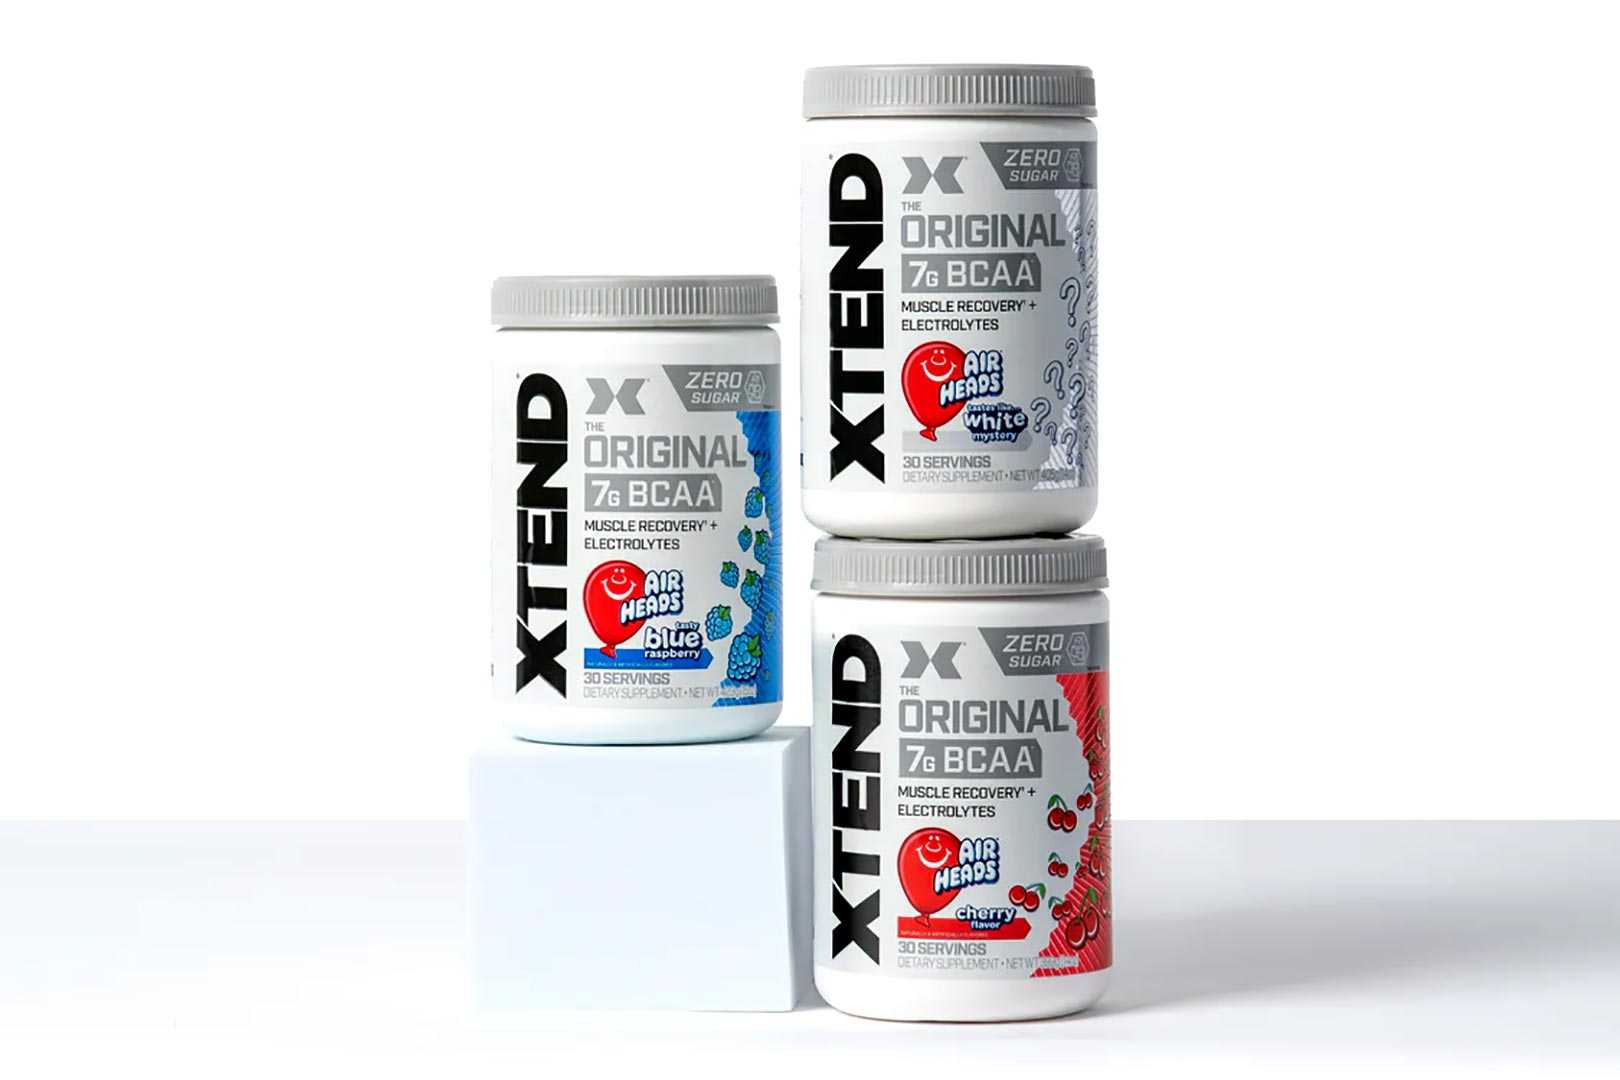 Airheads X Xtend Flavors